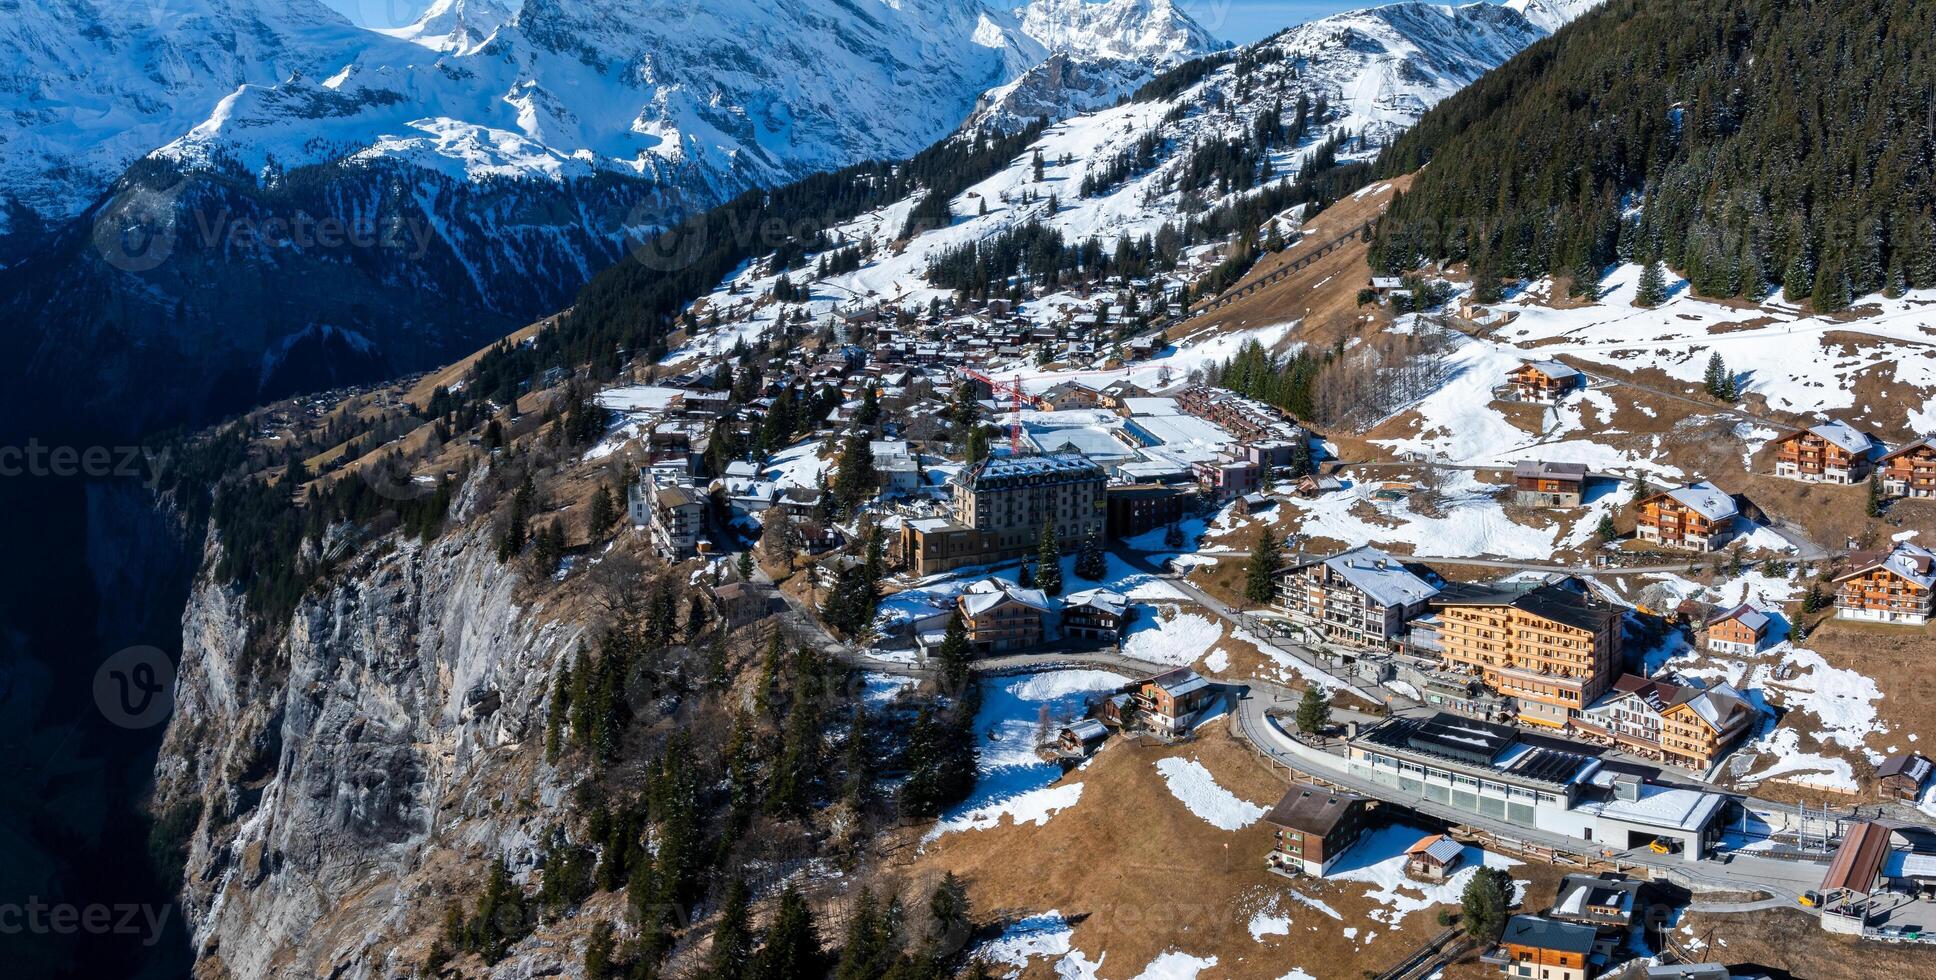 antenn se av murren, schweiz alpina stad mitt i snö capped toppar foto